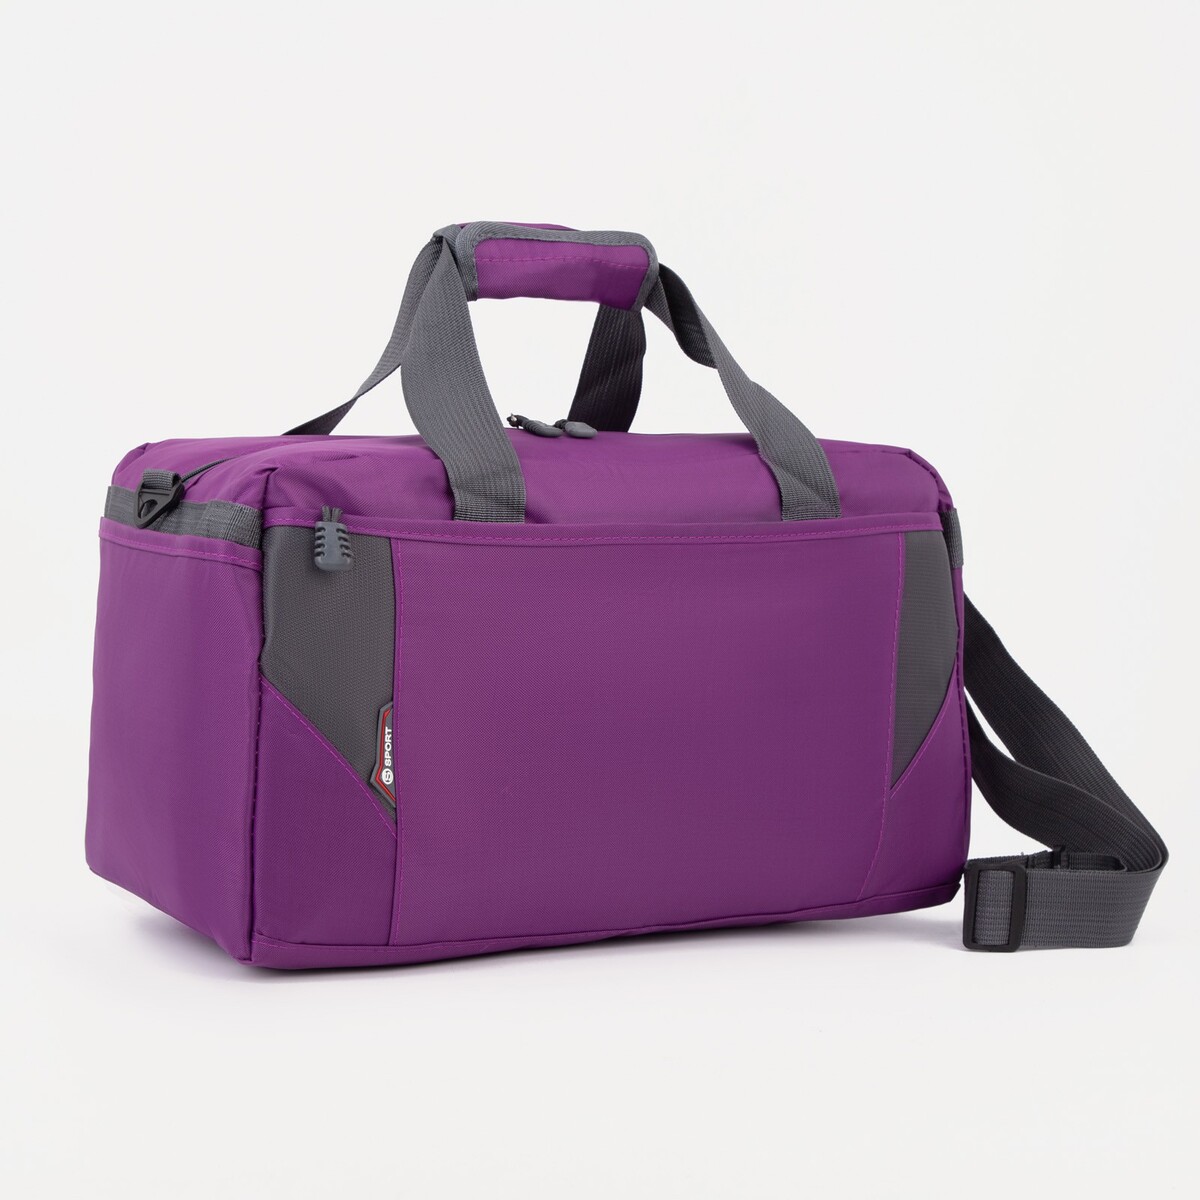 Сумка спортивная на молнии, 2 наружных кармана, цвет сиреневый сумка спортивная единорог 40х21х24 см сиреневый